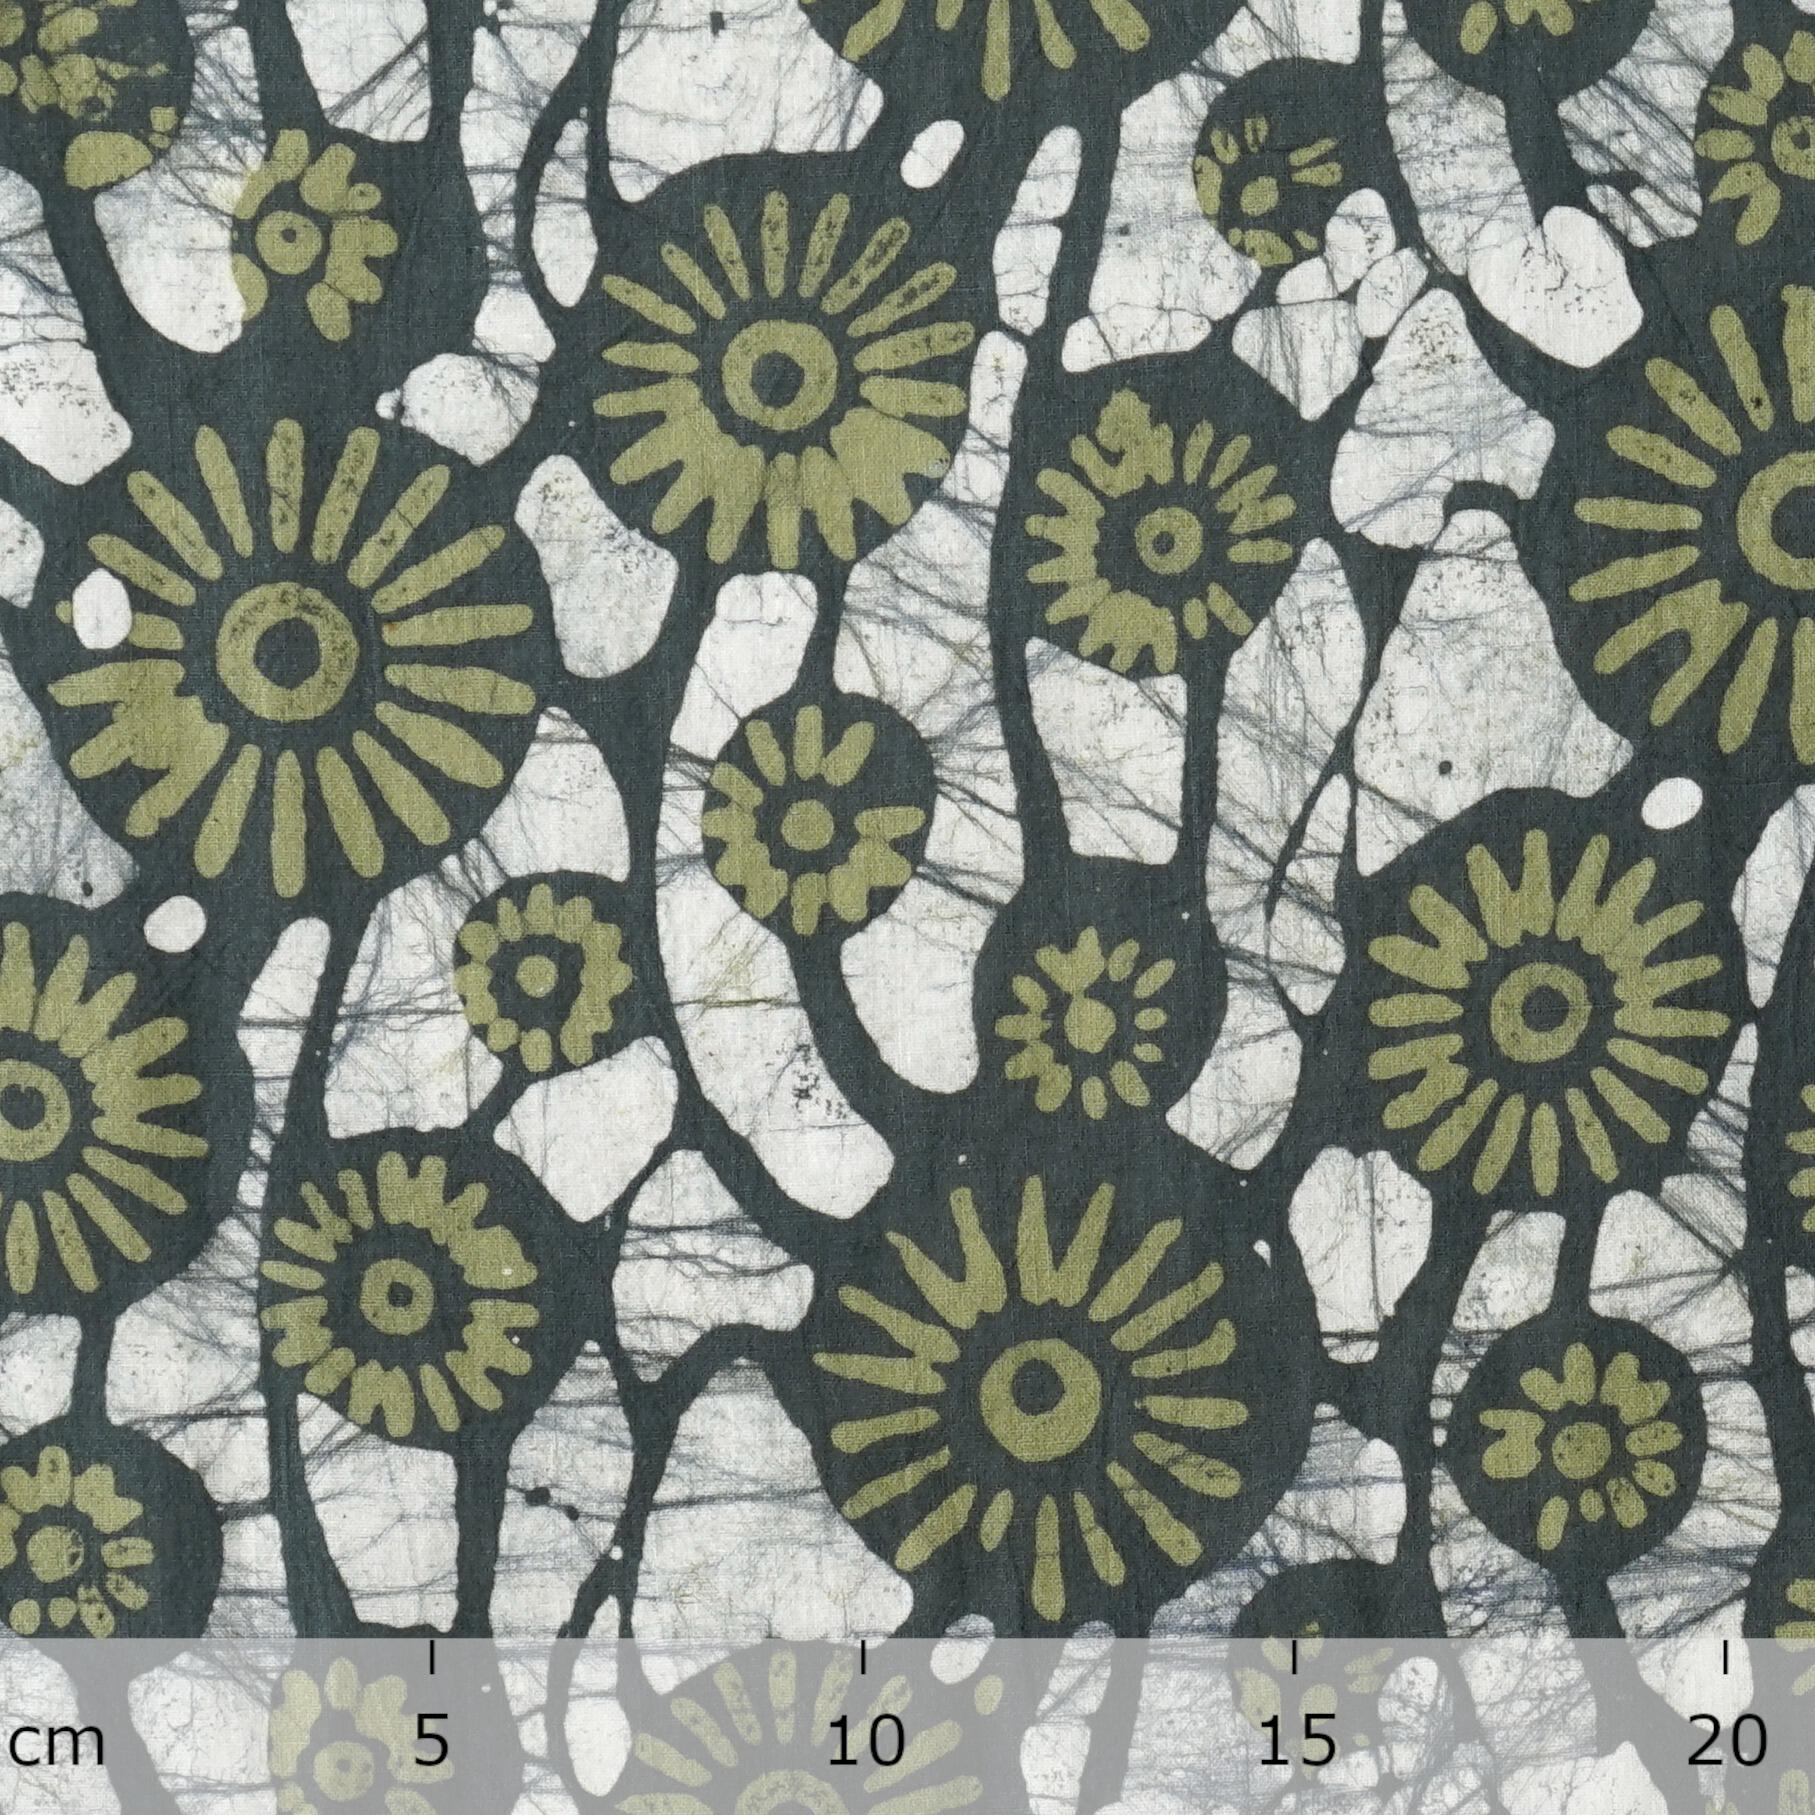 Block-Printed Batik Fabric - Cotton Cloth - Reactive Dyes - Choicest Moss Design - Ruler